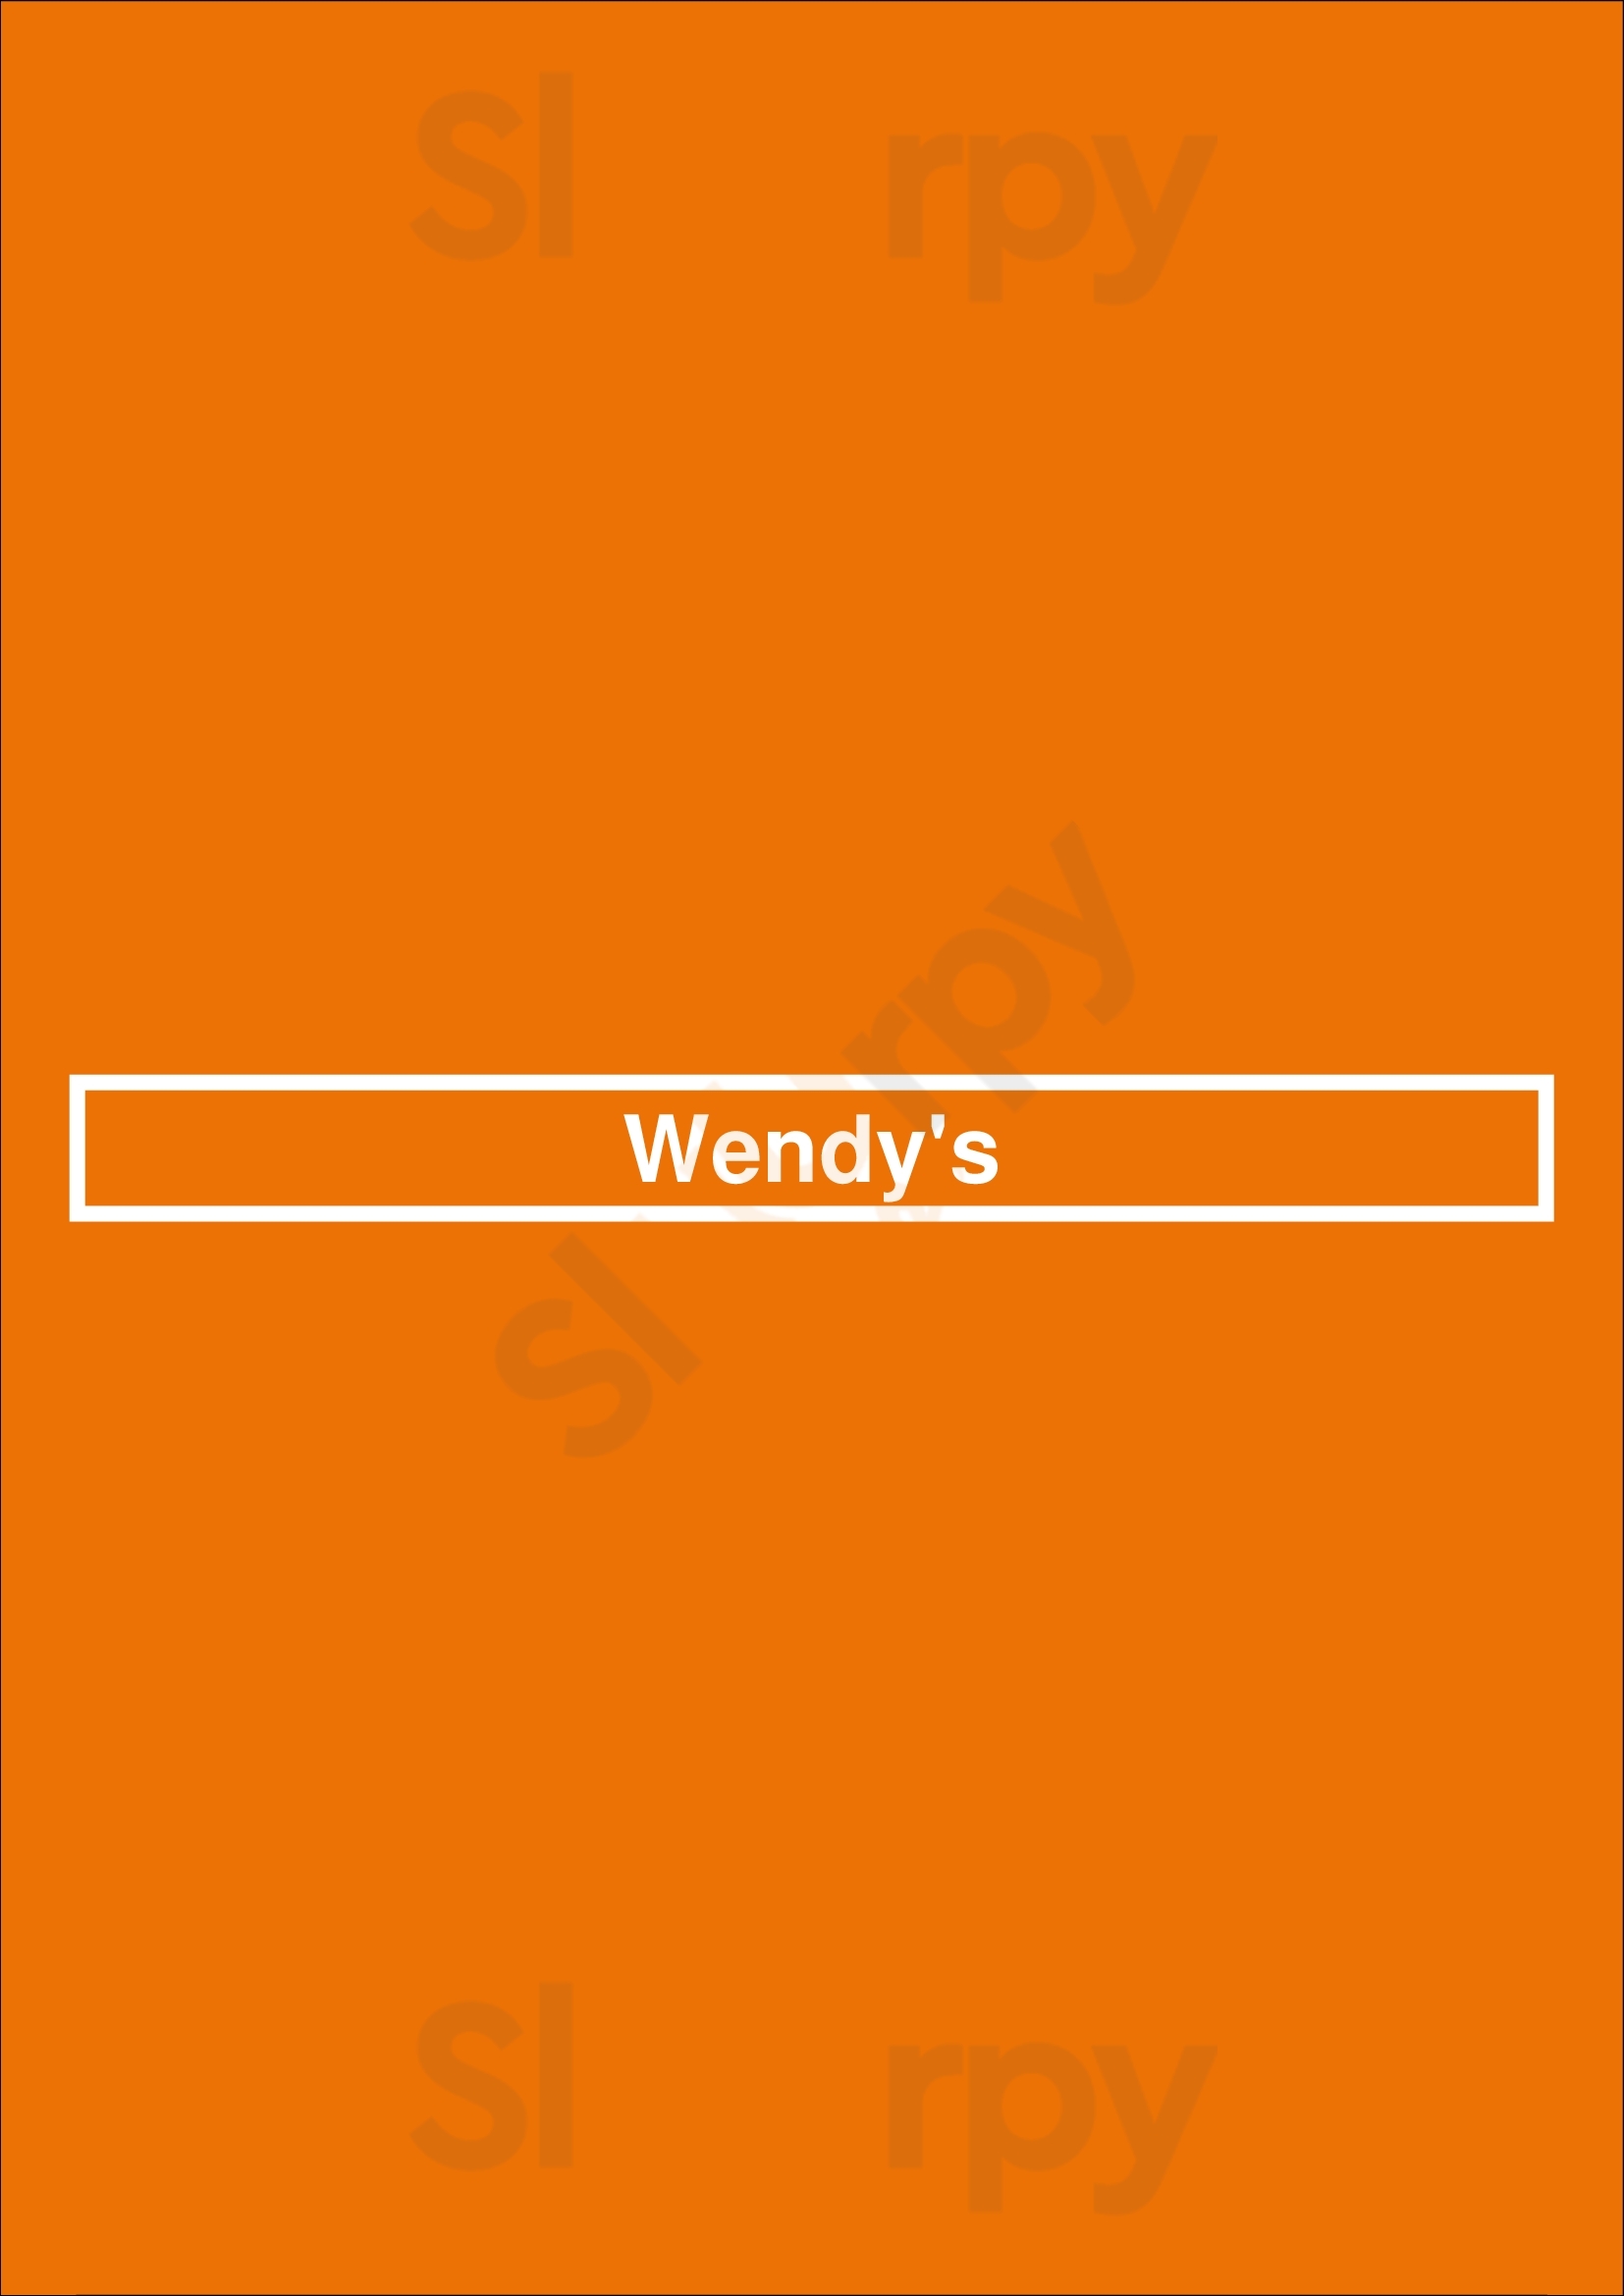 Wendy's Pasadena Menu - 1